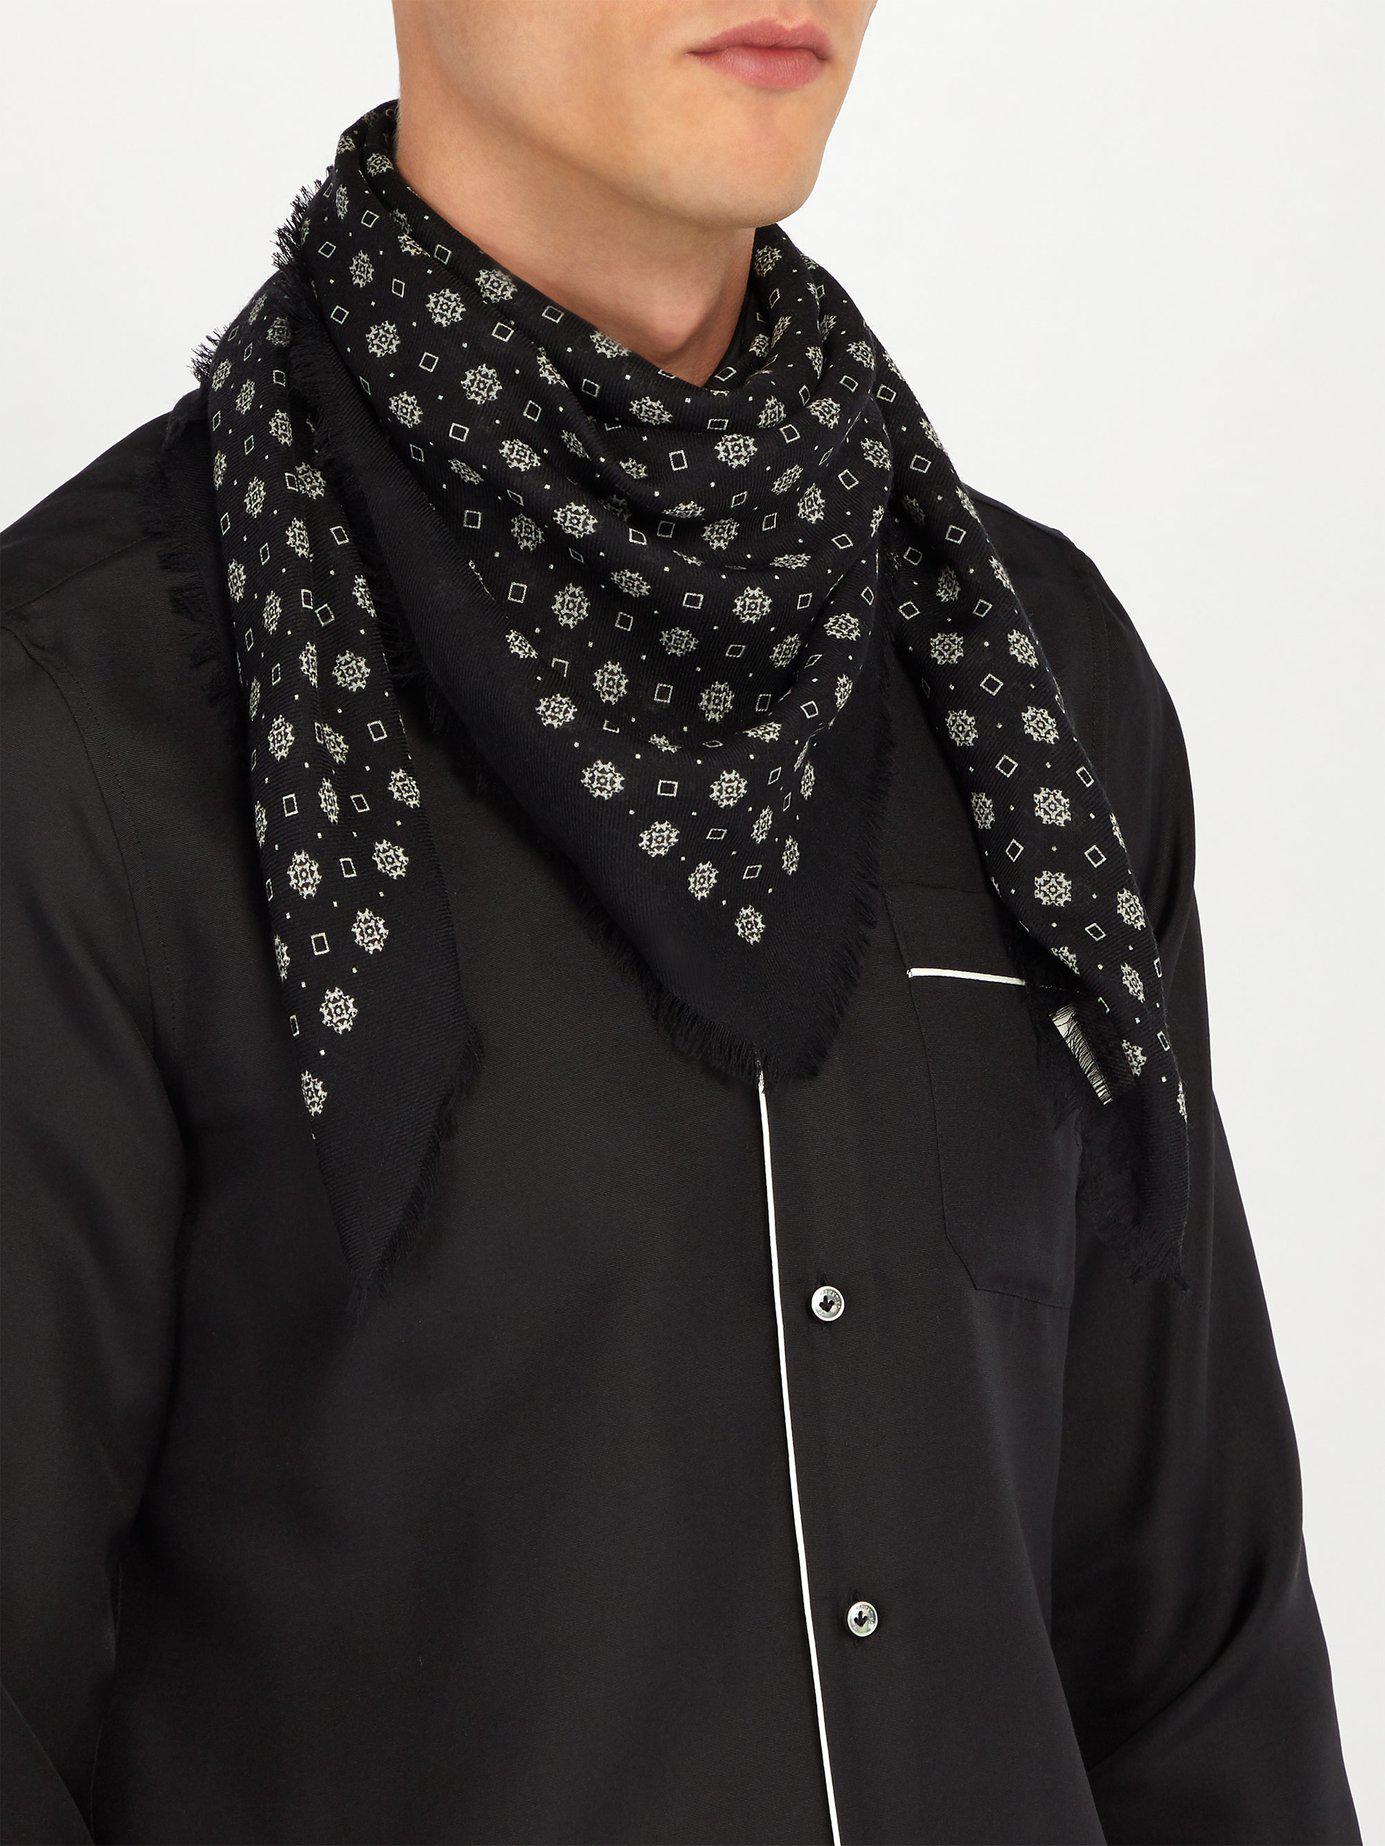 Saint Laurent Bandana Print Wool Scarf in Black for Men | Lyst